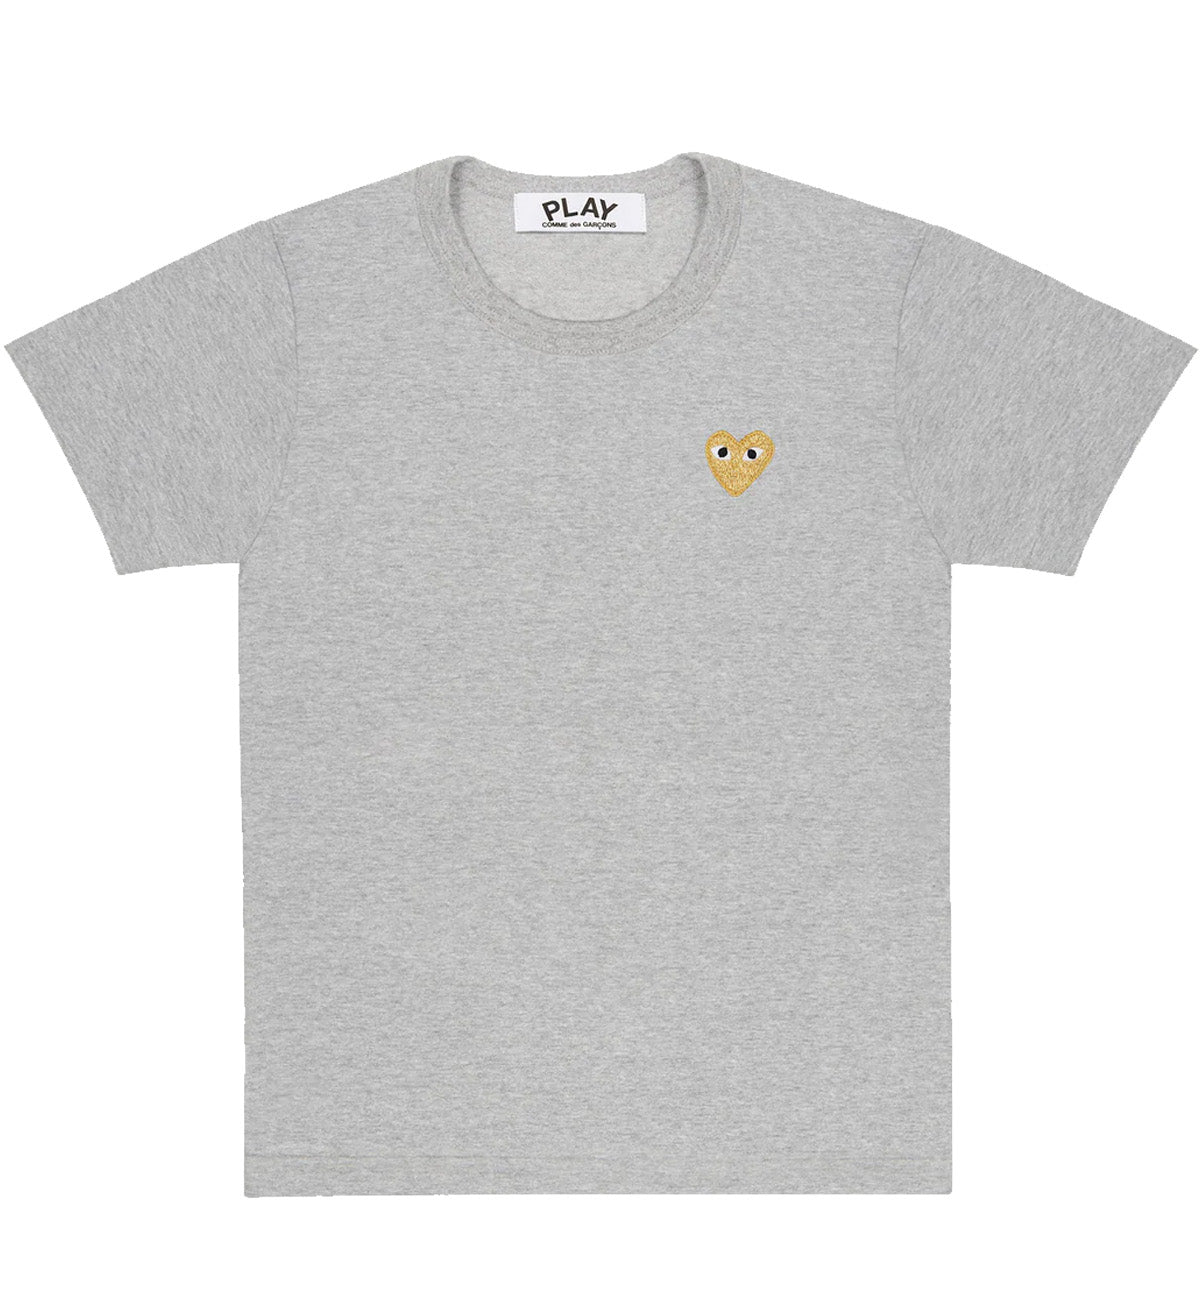 CDG Play Gold Heart T-Shirt (Grey)